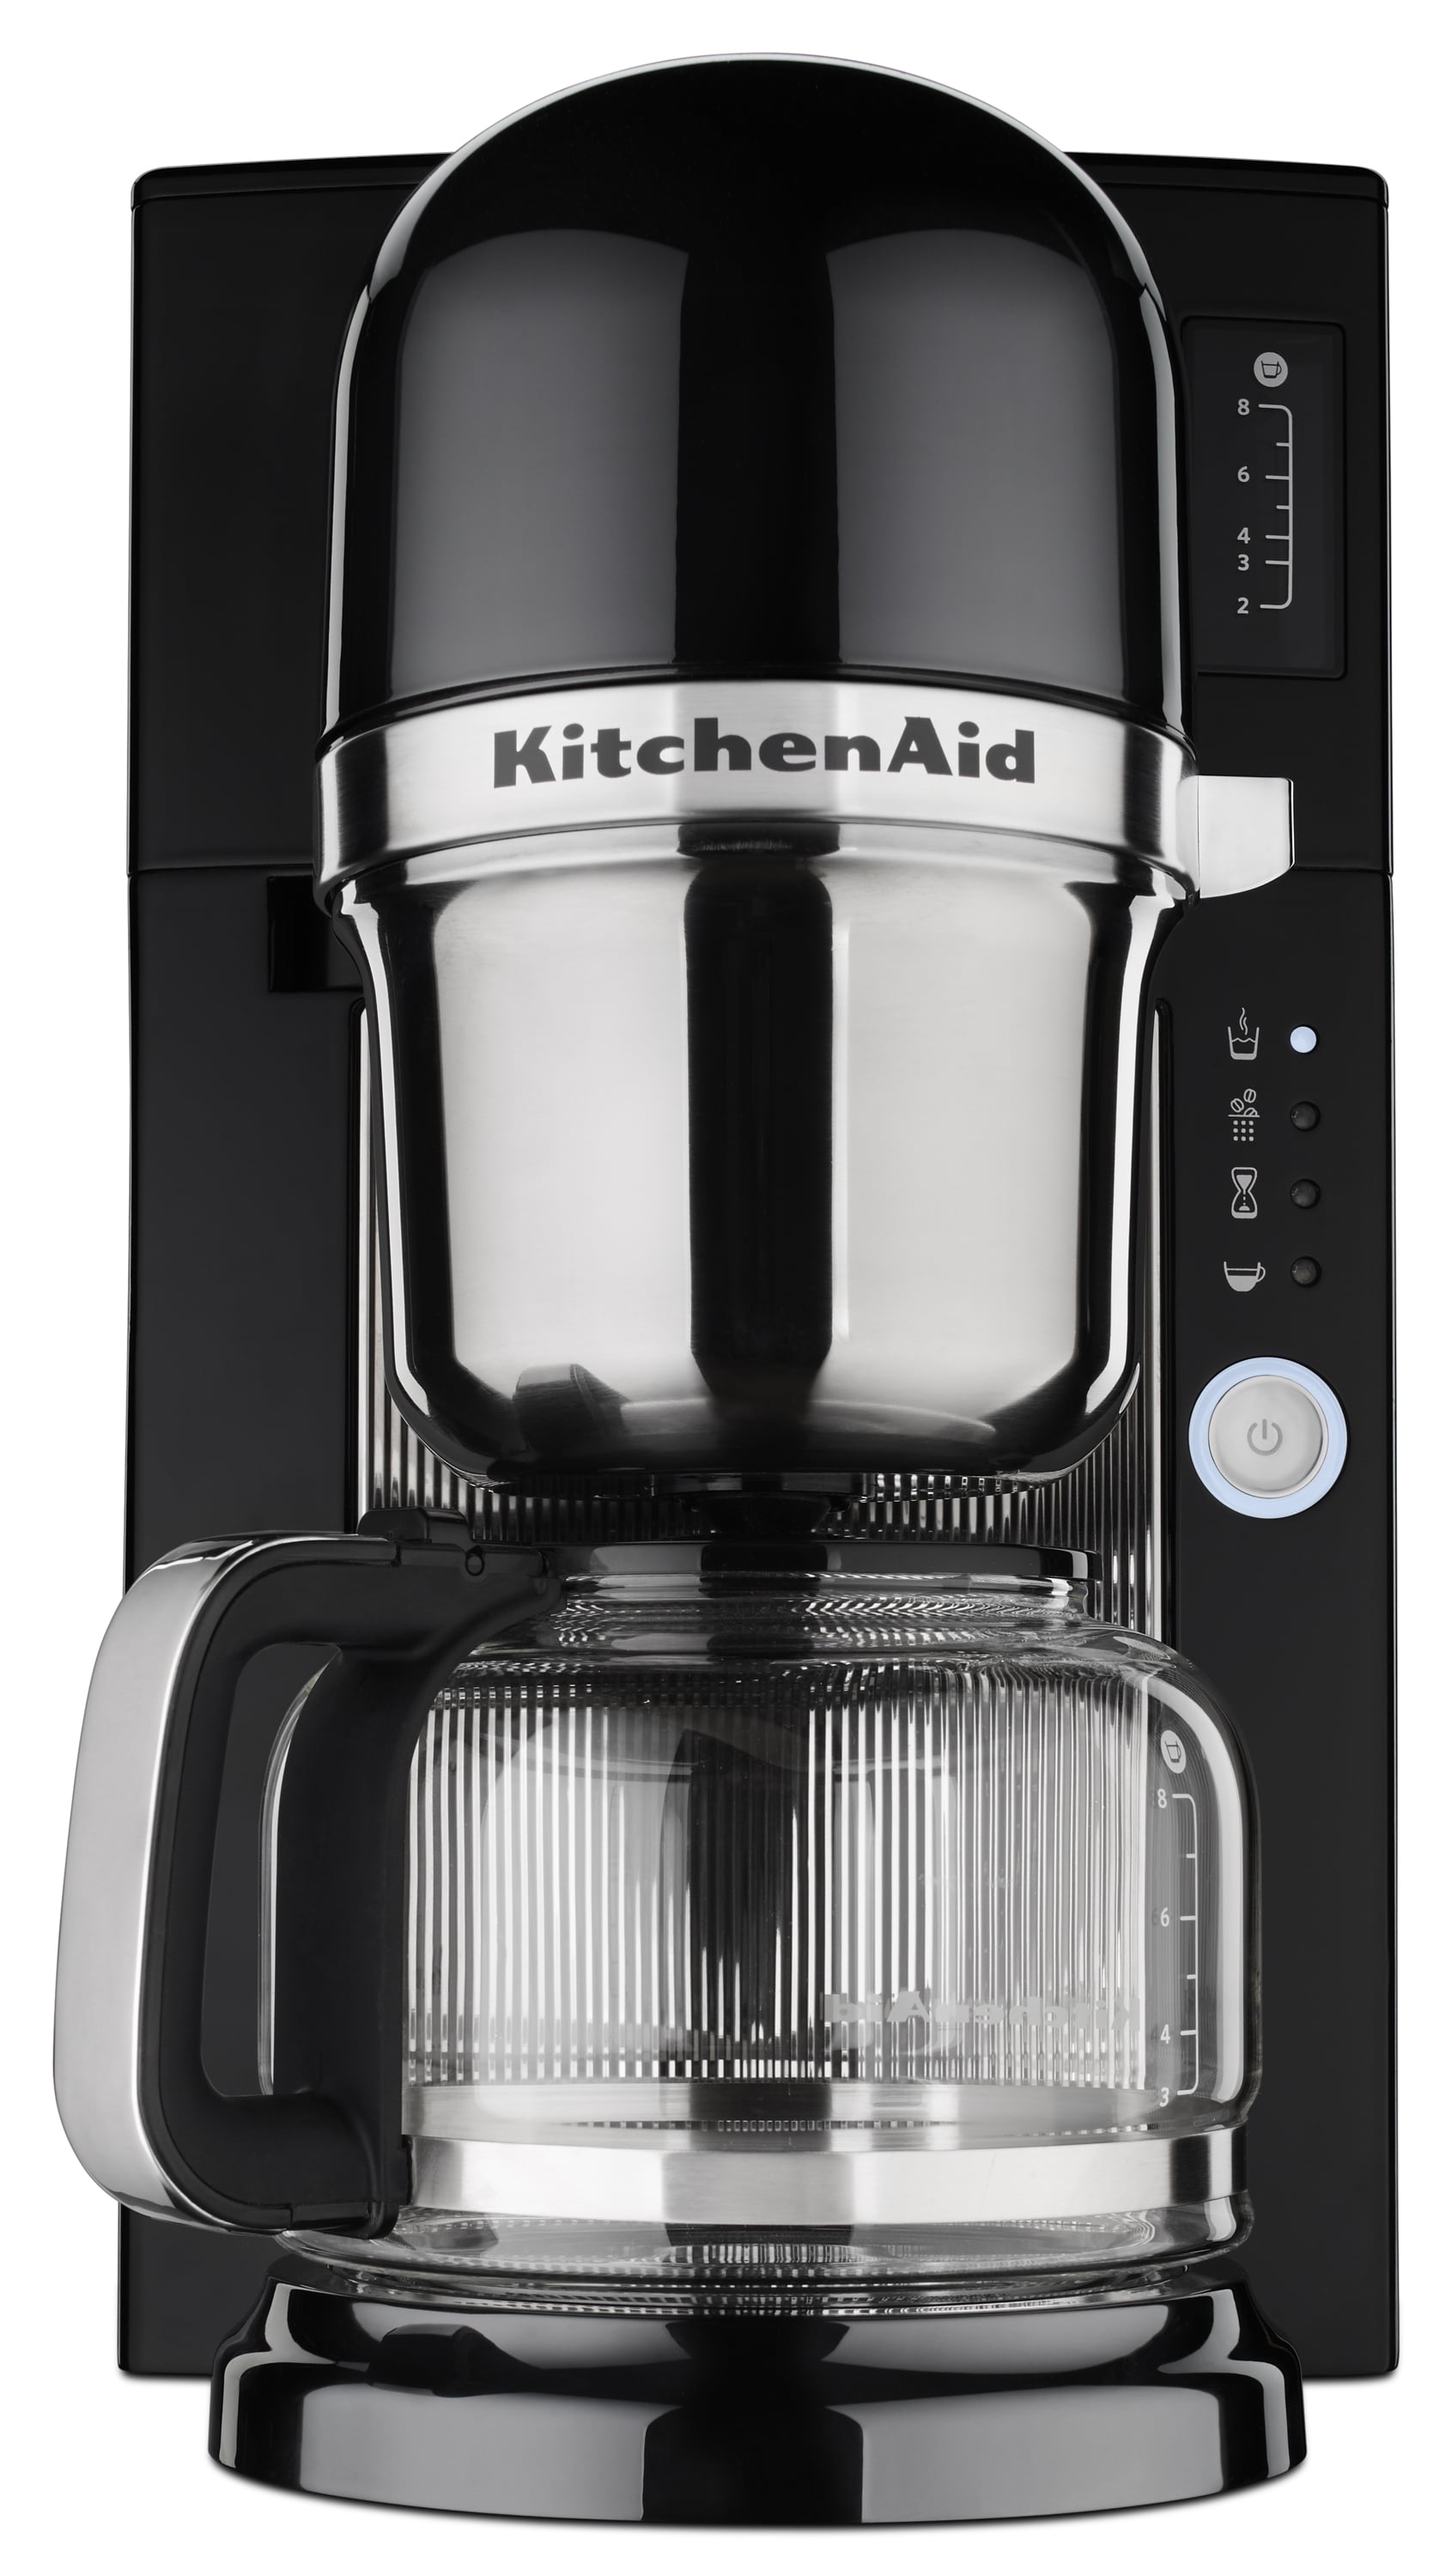 KitchenAid 5KCM0802EOB Pour Over Coffee Maker Brewer 220 Volts Export - Black